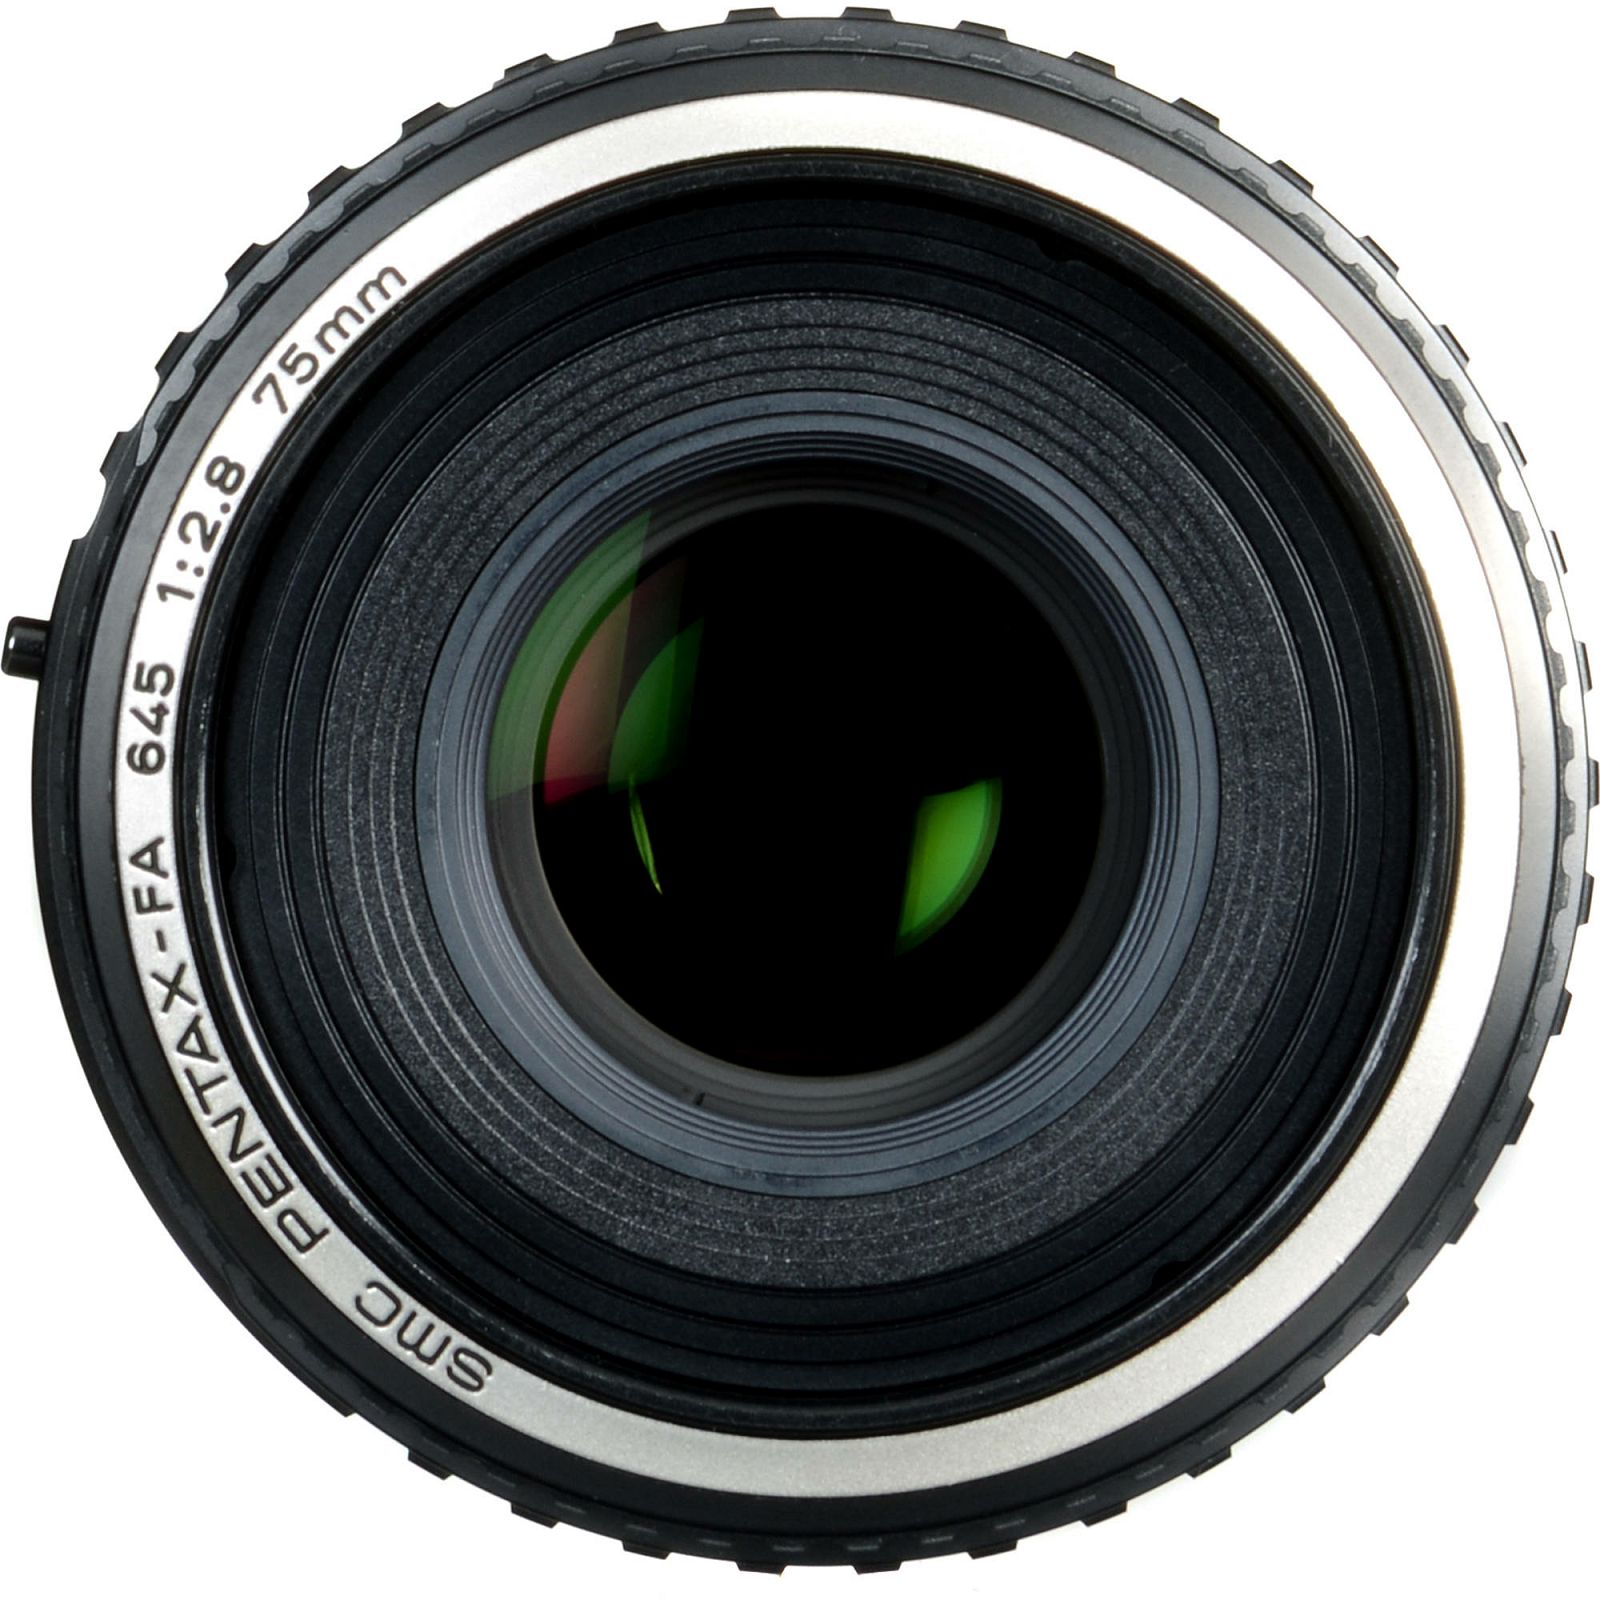 Pentax 75mm f/2.8 Standardni objektiv fiksne žarišne duljine prime lens SMC FA 645 (26121)